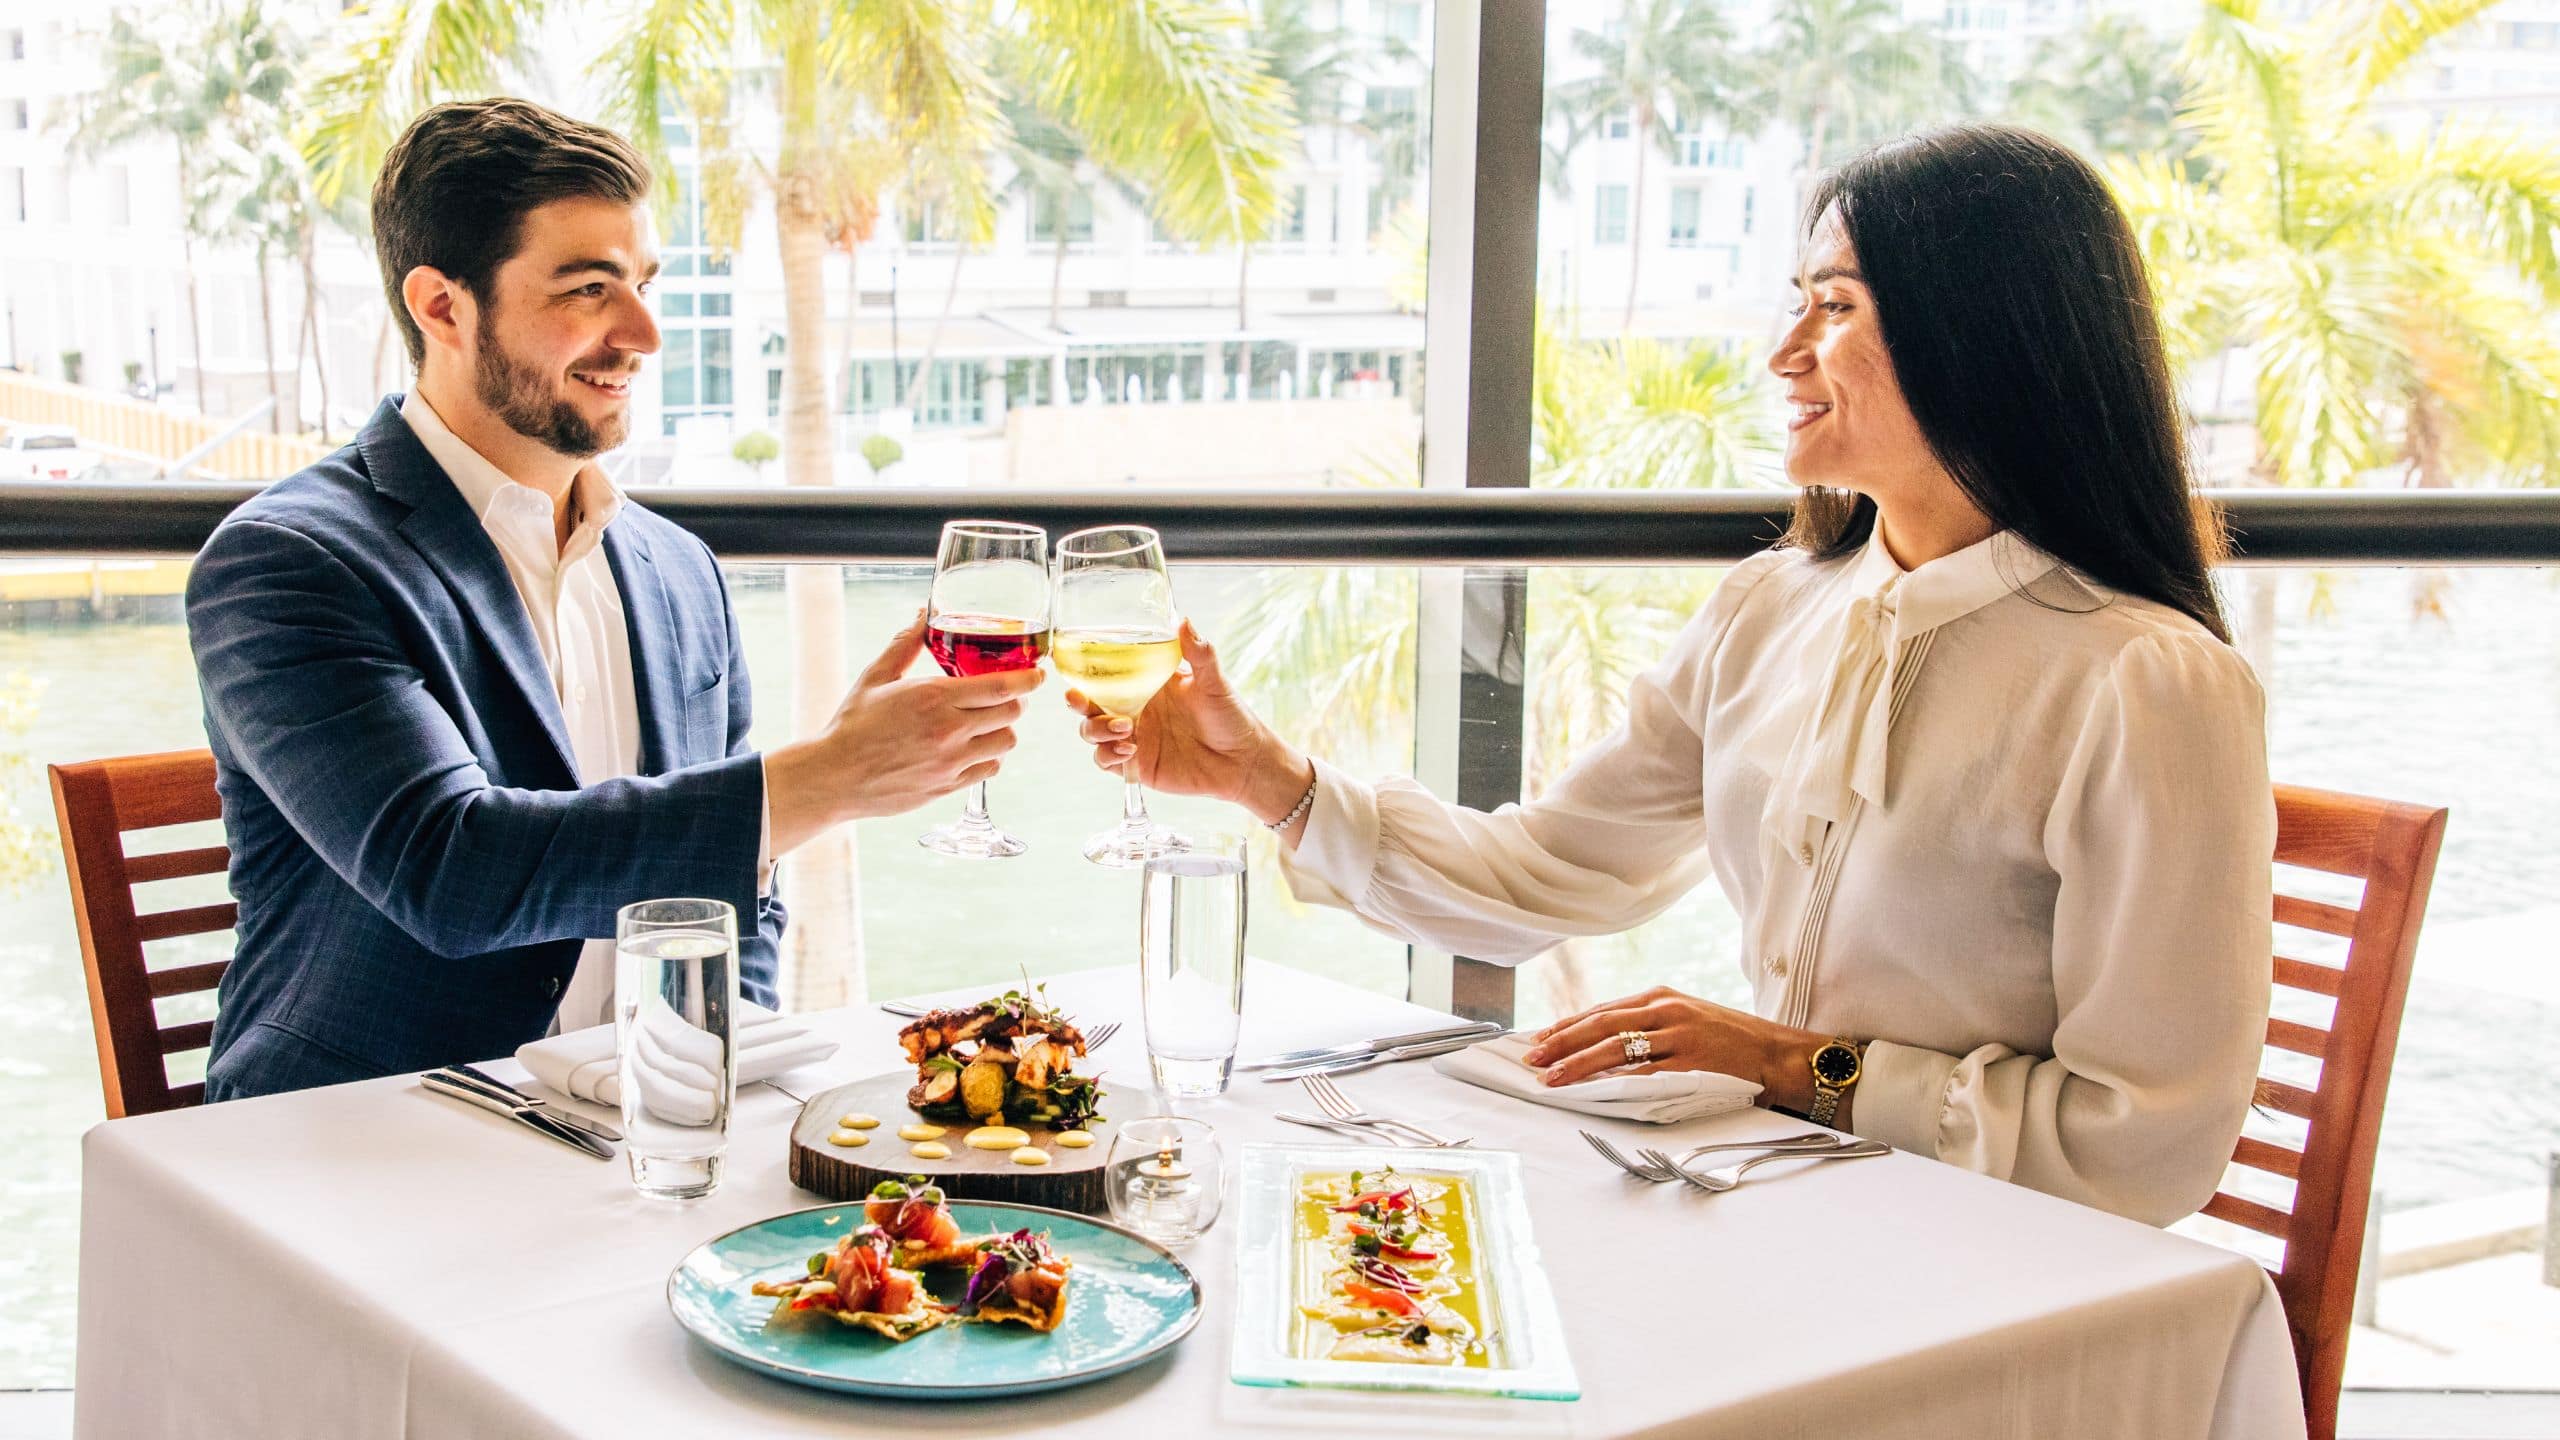 Hyatt Regency Miami Riverview Bar Grill Dinner Couple